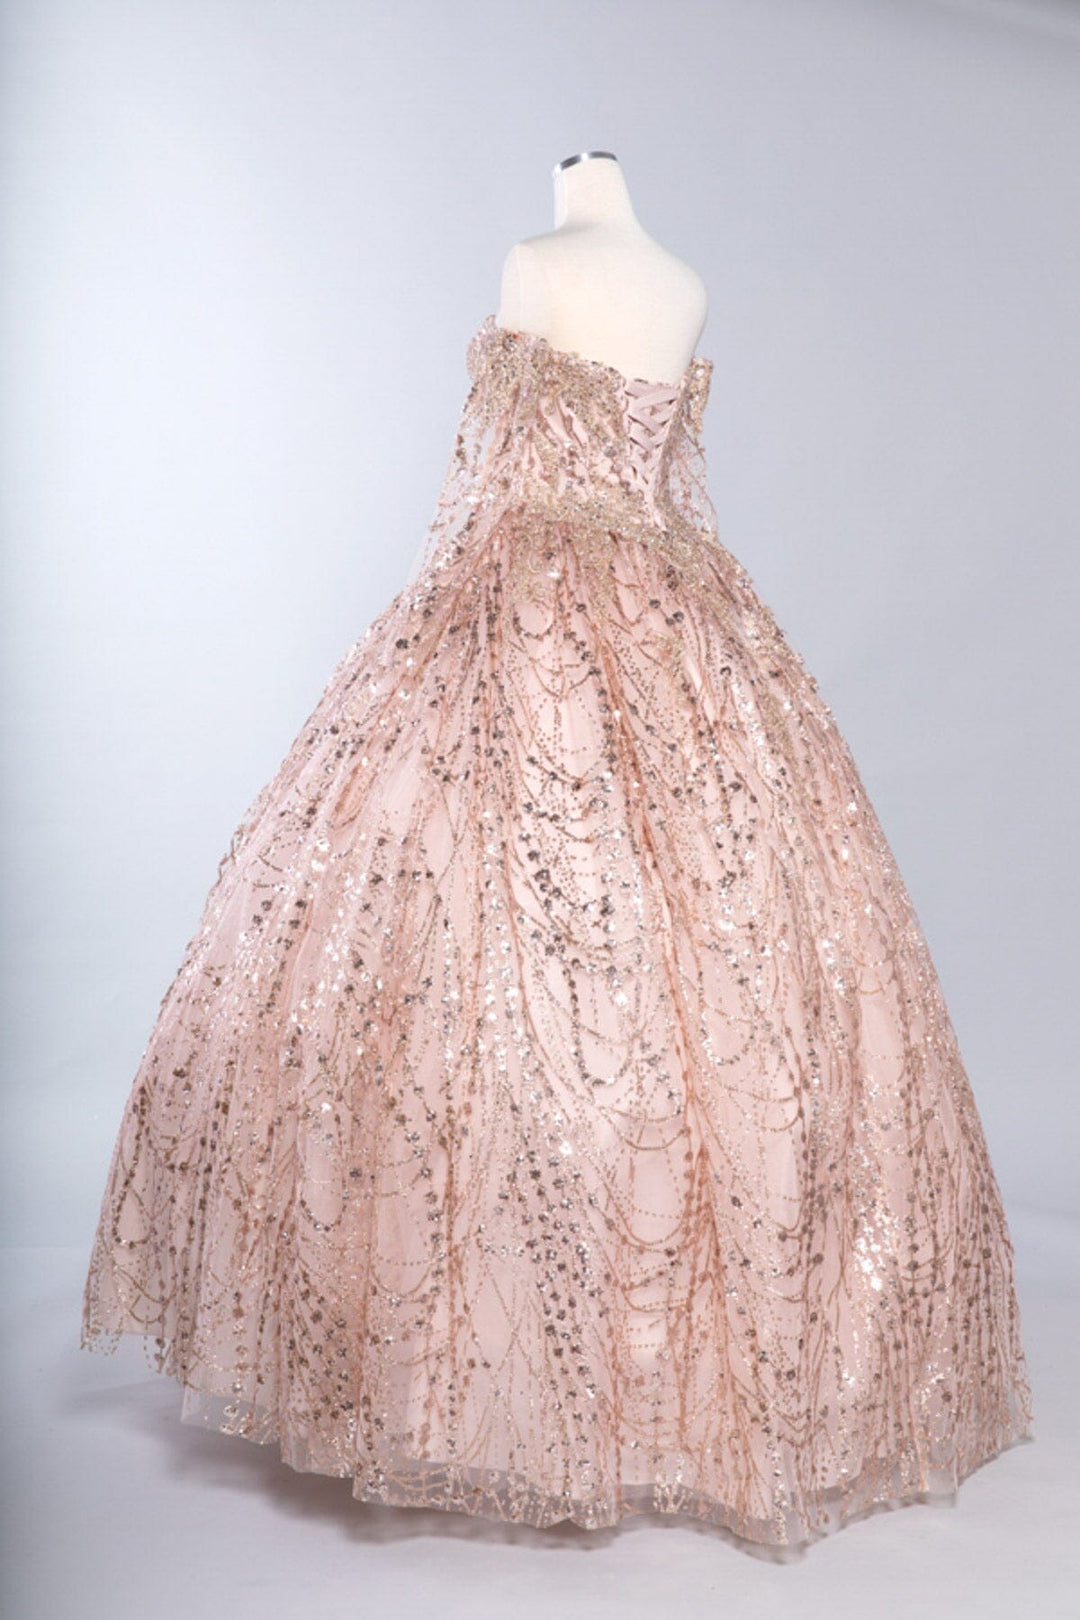 Long Sleeve Glitter Print Ball Gown by Coya L2460